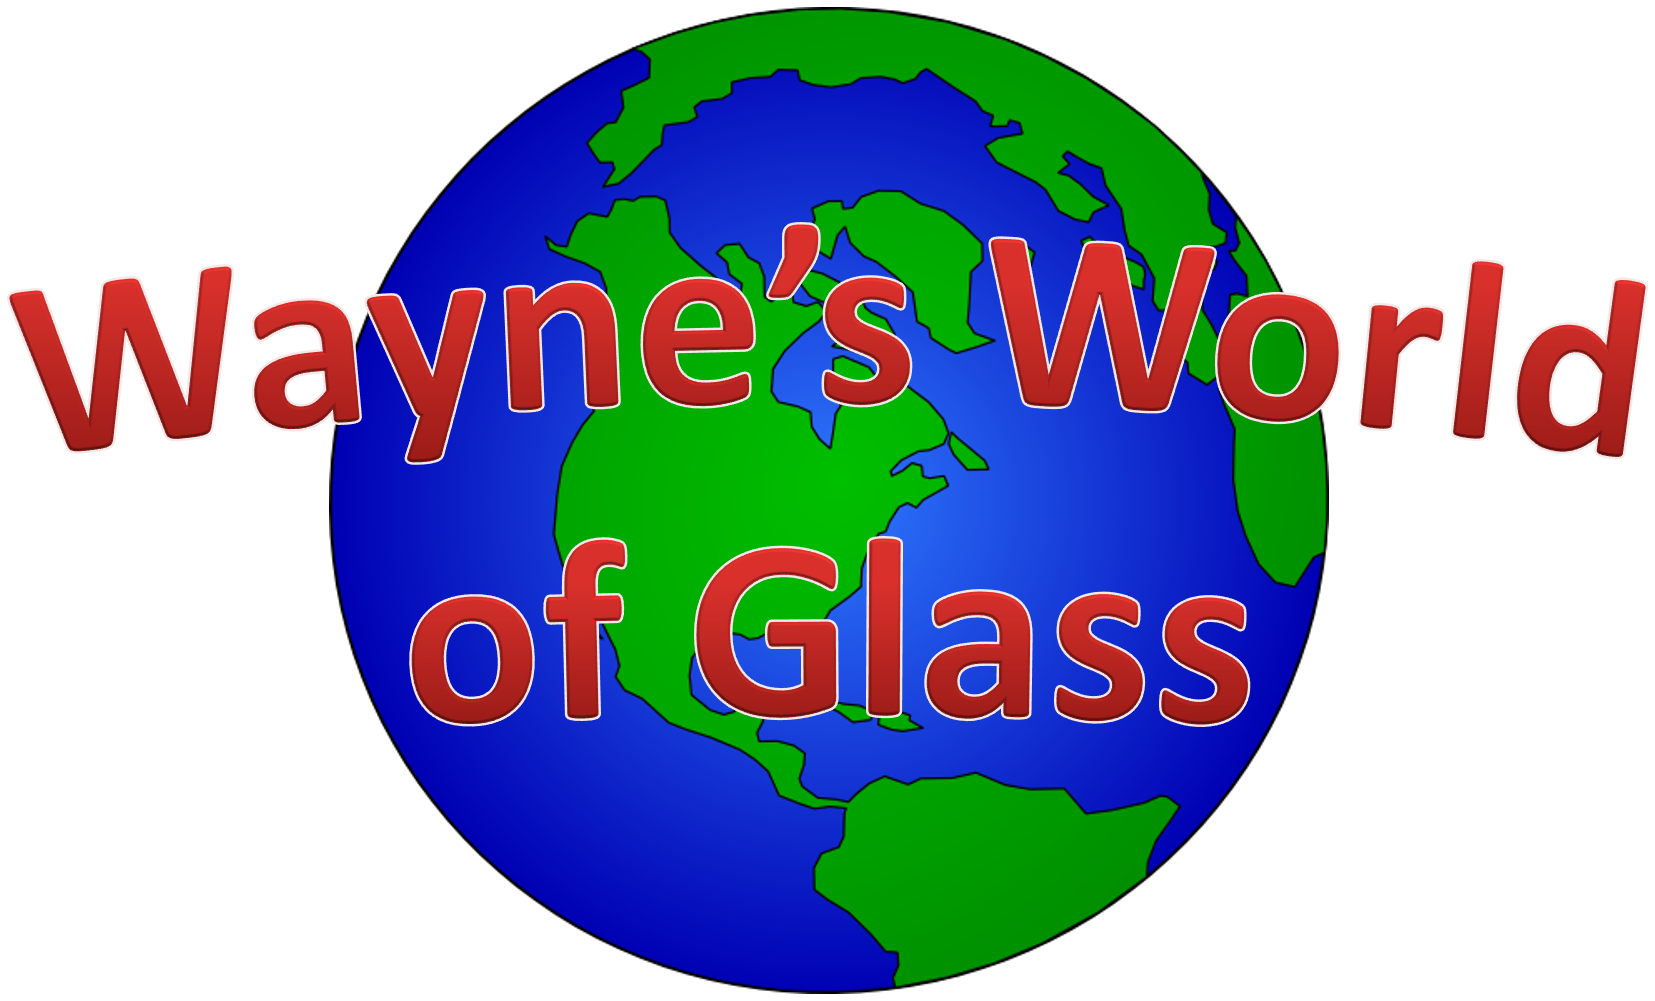 Wayne's World of Glass logo